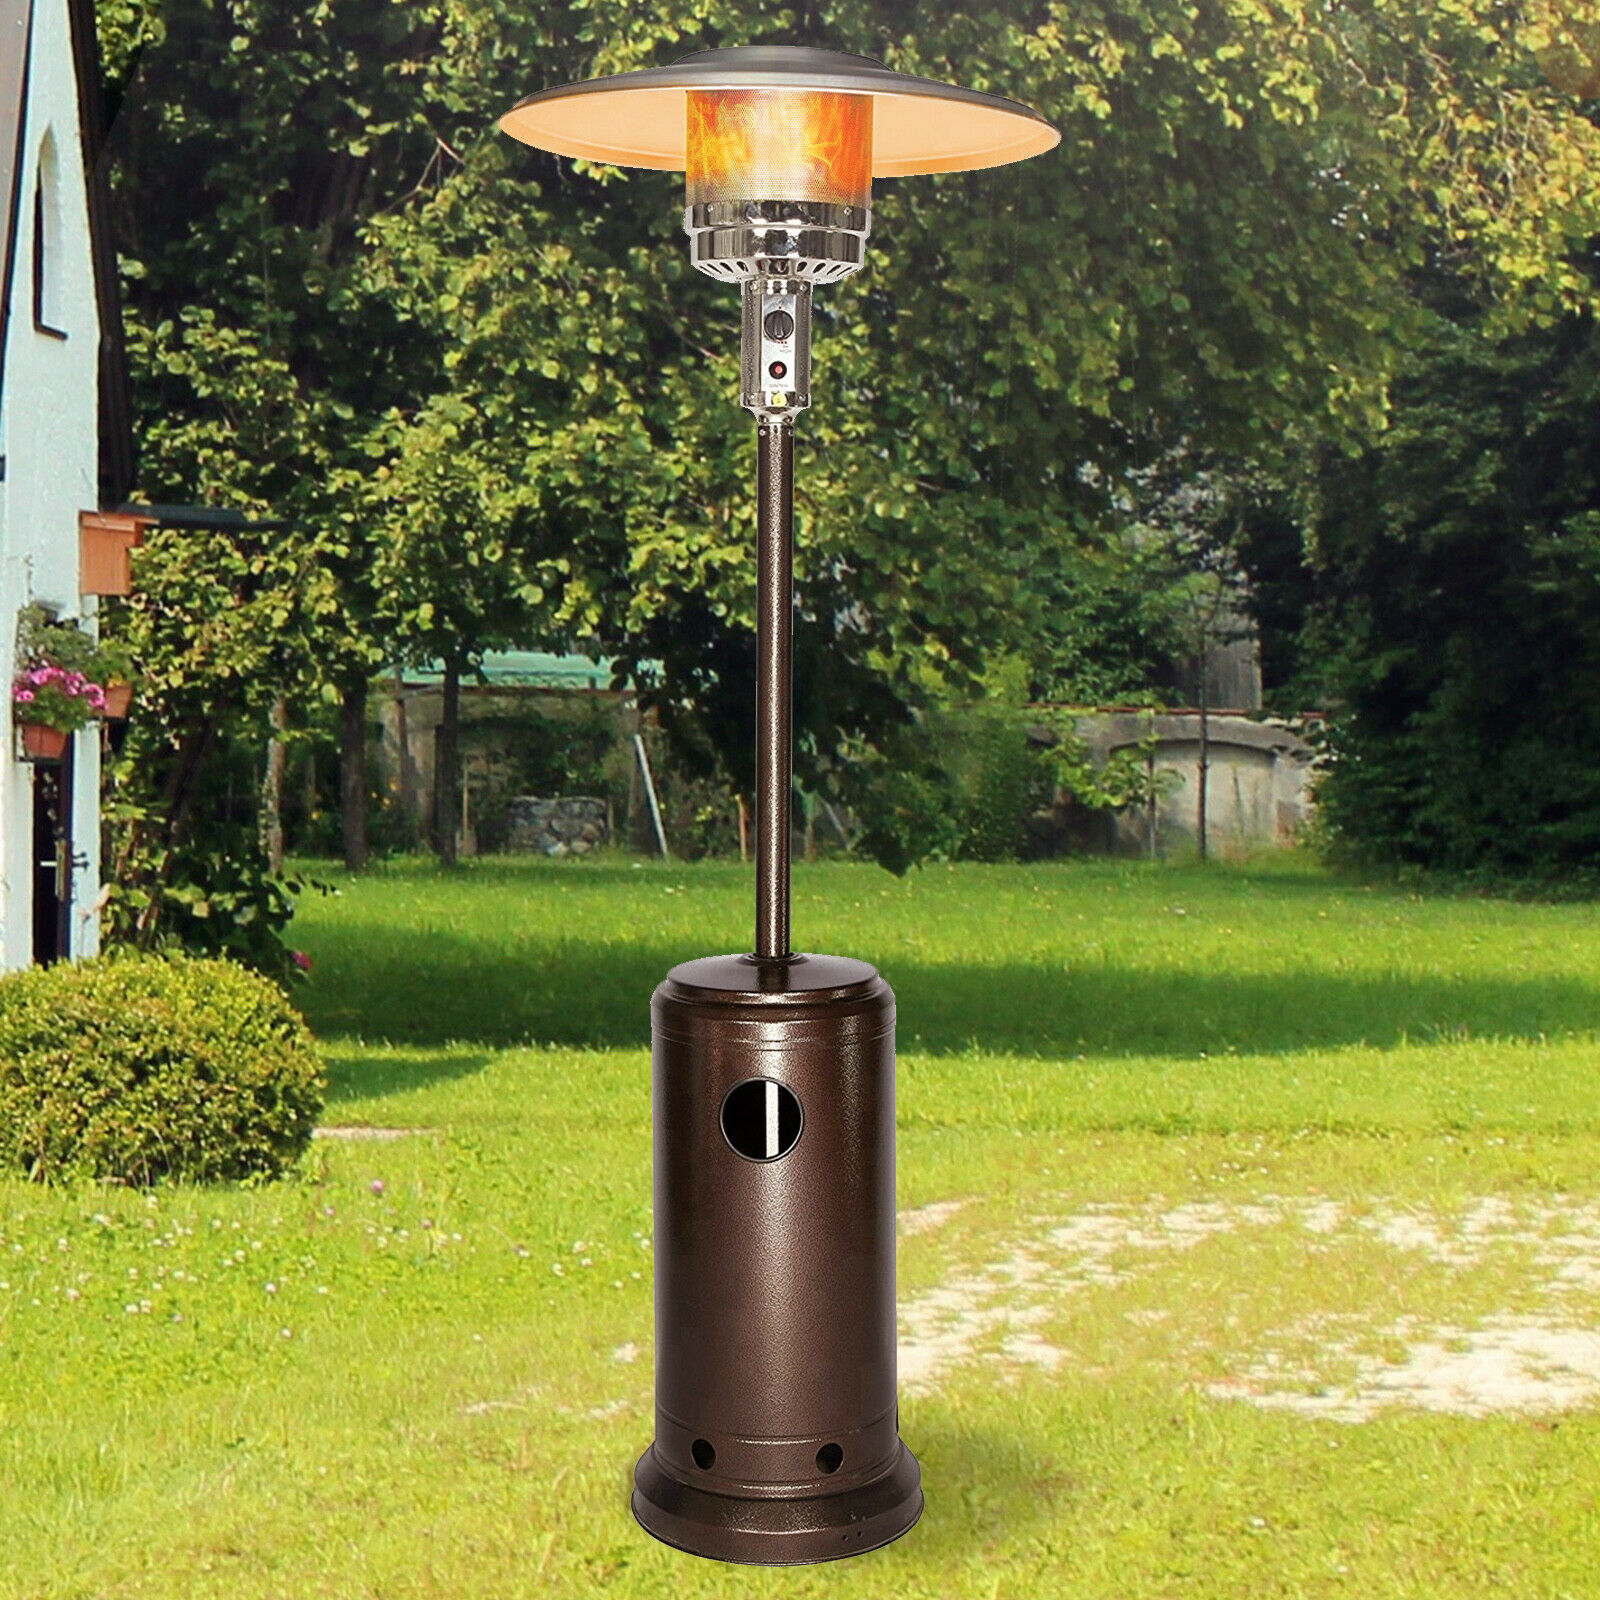 Lamqee 48000 Btu Outdoor Propane Patio Heater with Wheel Garden Cafe Restaurant